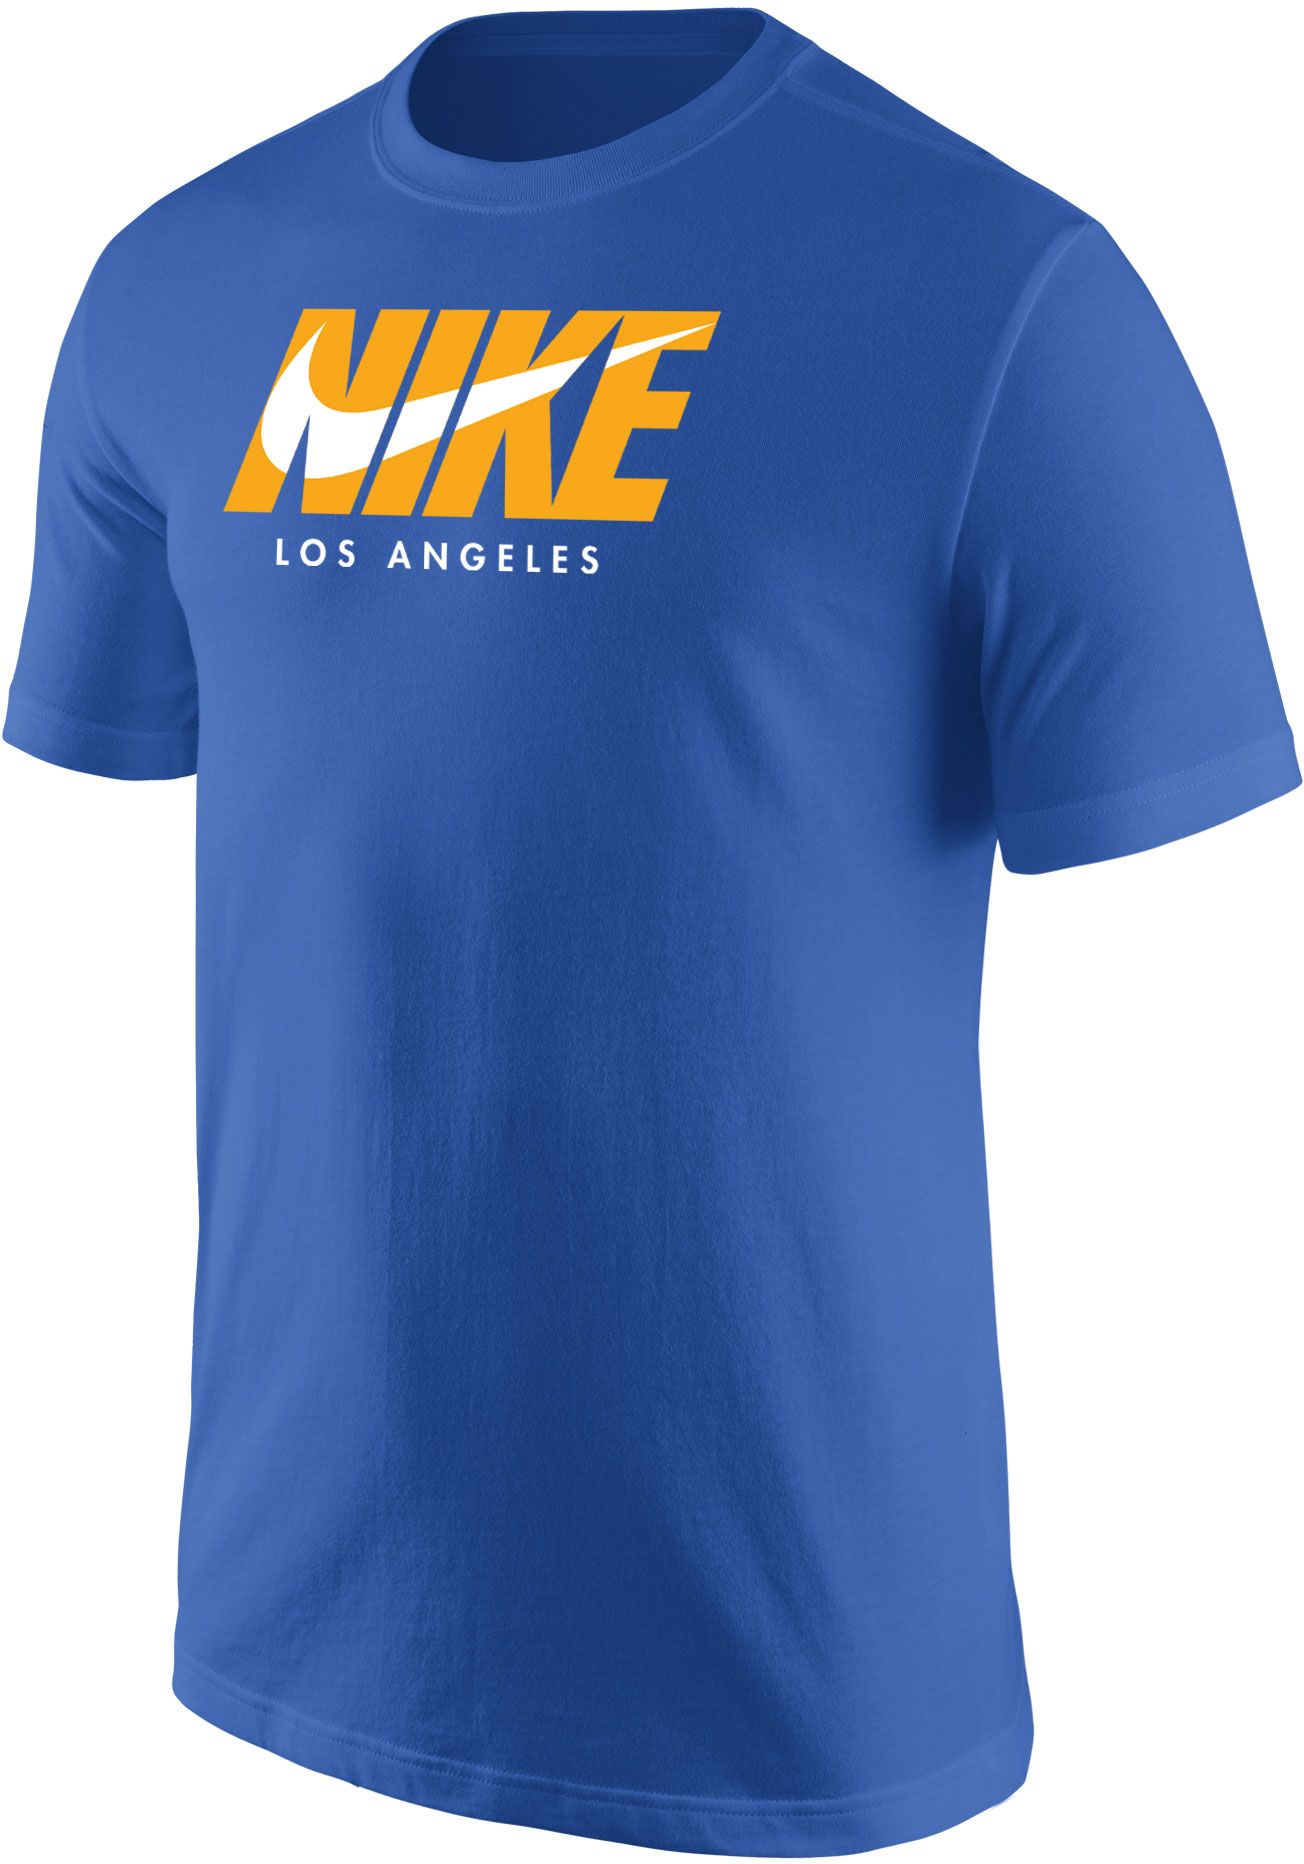 Nike Men's UCLA Bruins Los Angeles True Blue City 3.0 T-Shirt